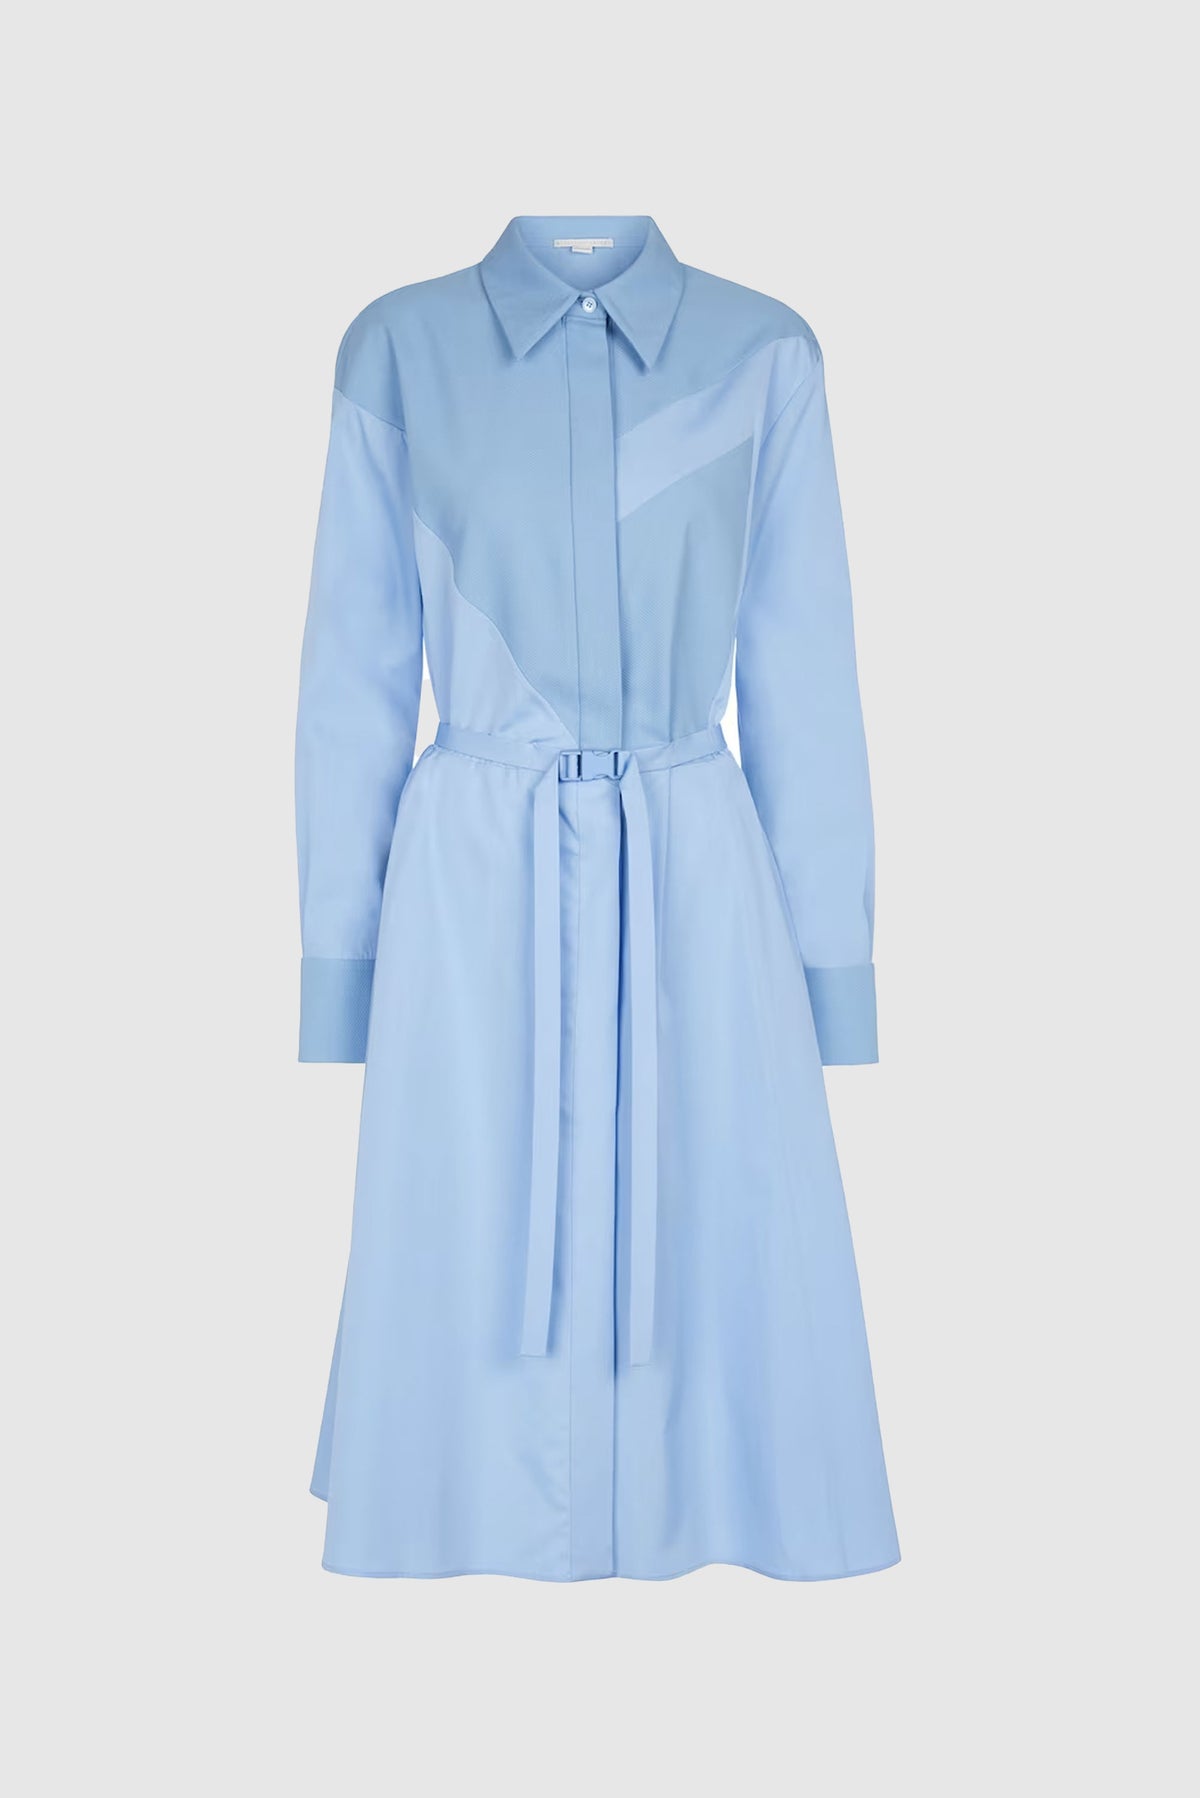 Stella McCartney Cotton Belted Shirt Dress